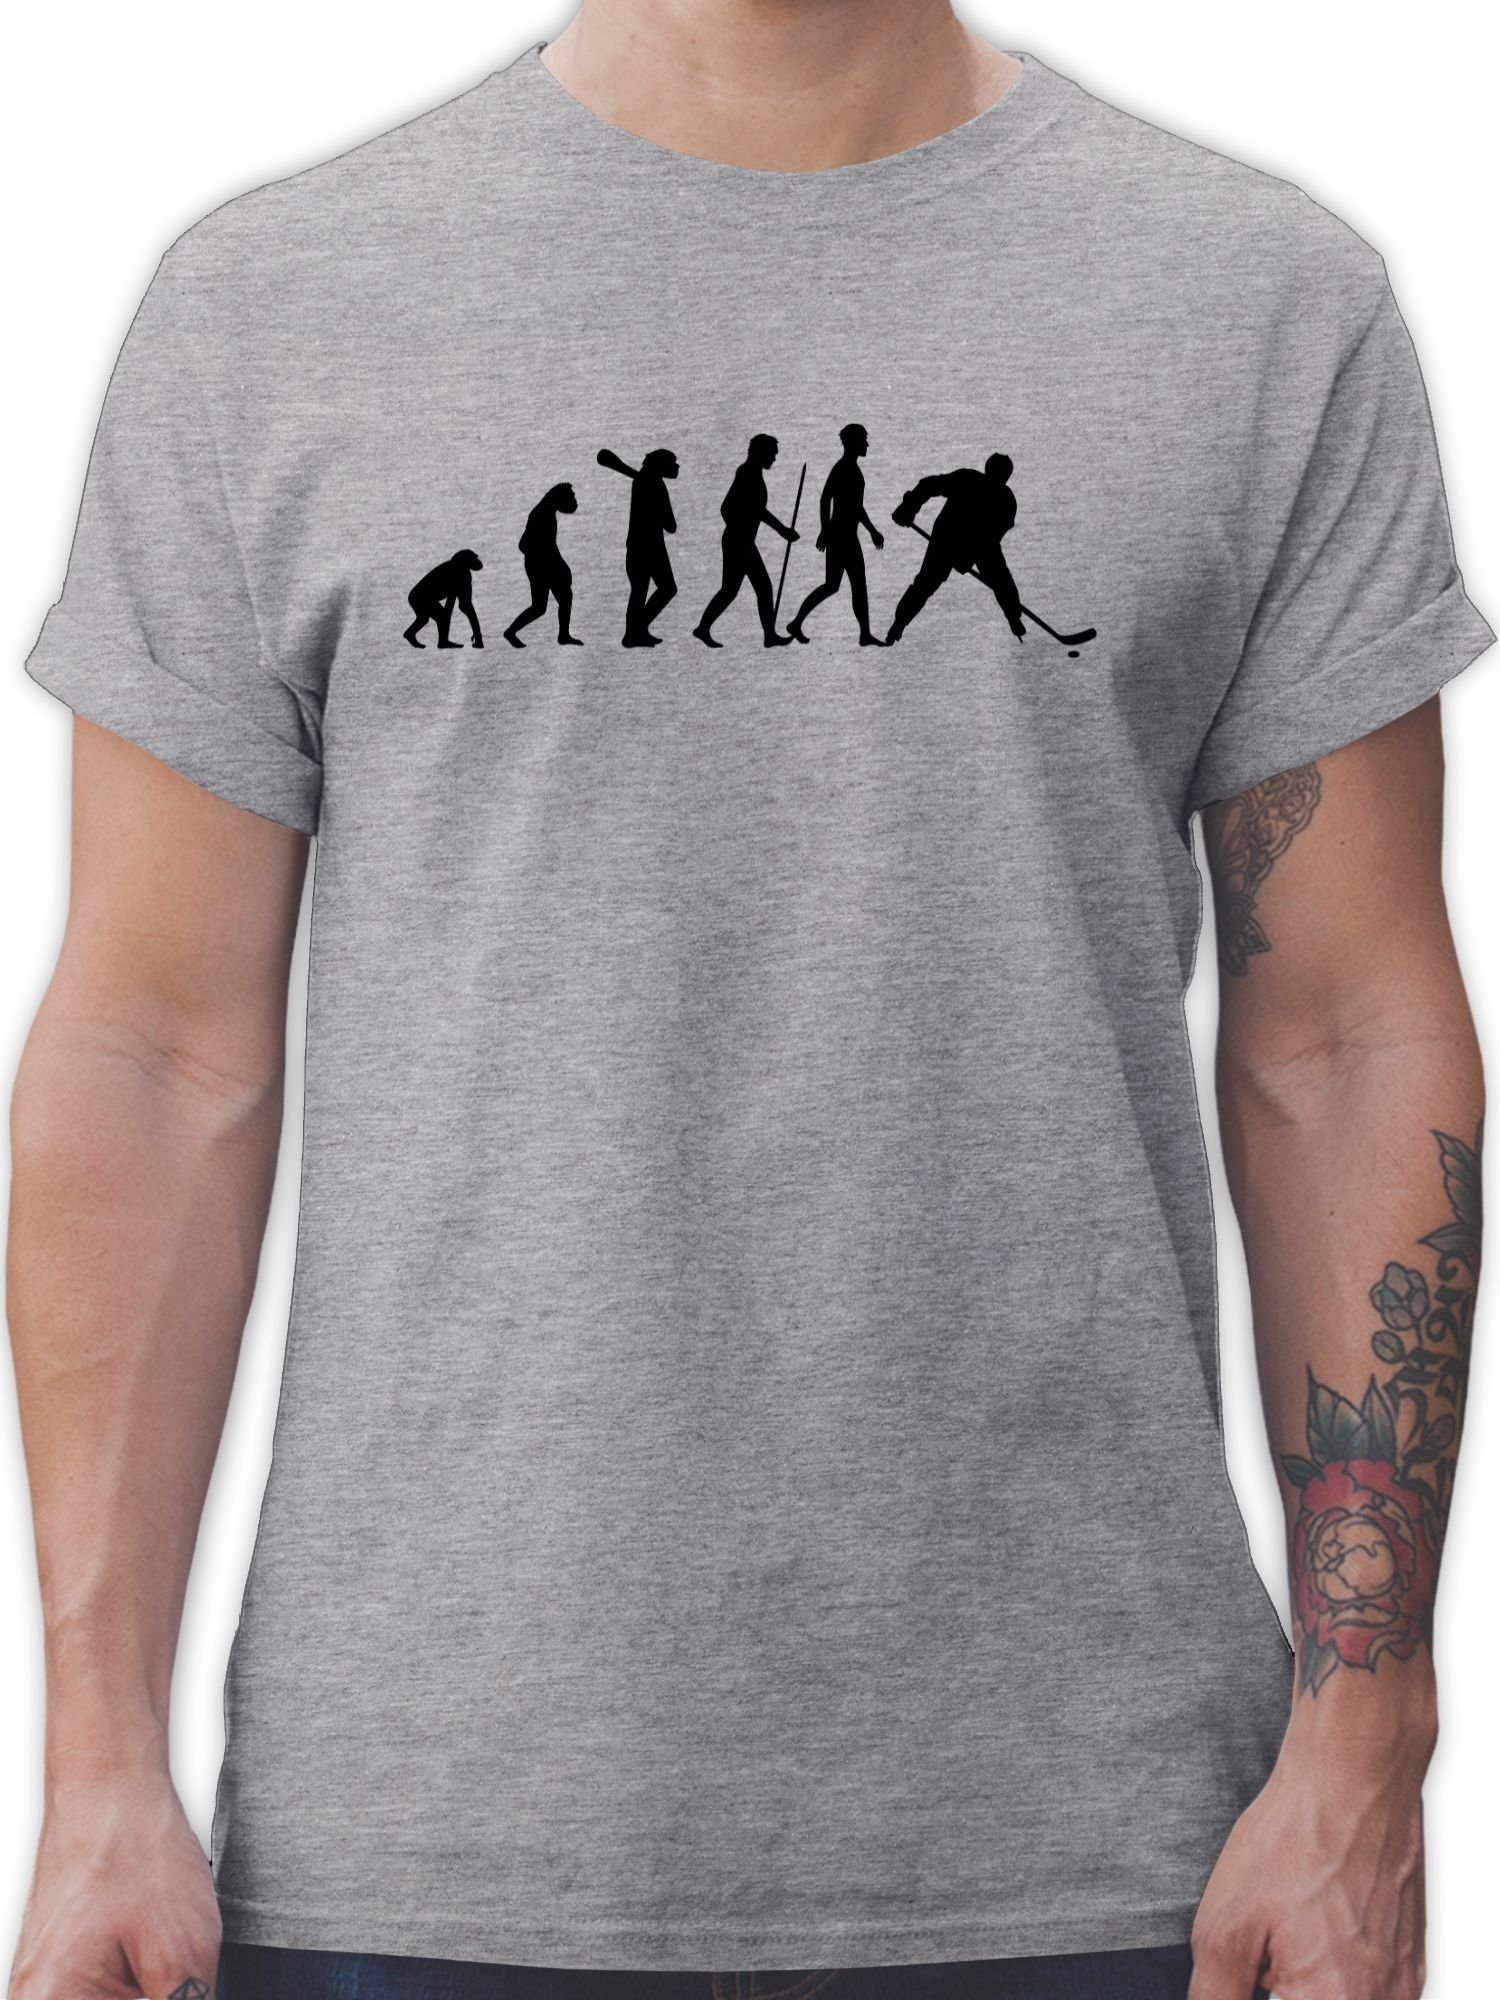 Shirtracer T-Shirt Eishockey Evolution Evolution Outfit 2 Grau meliert